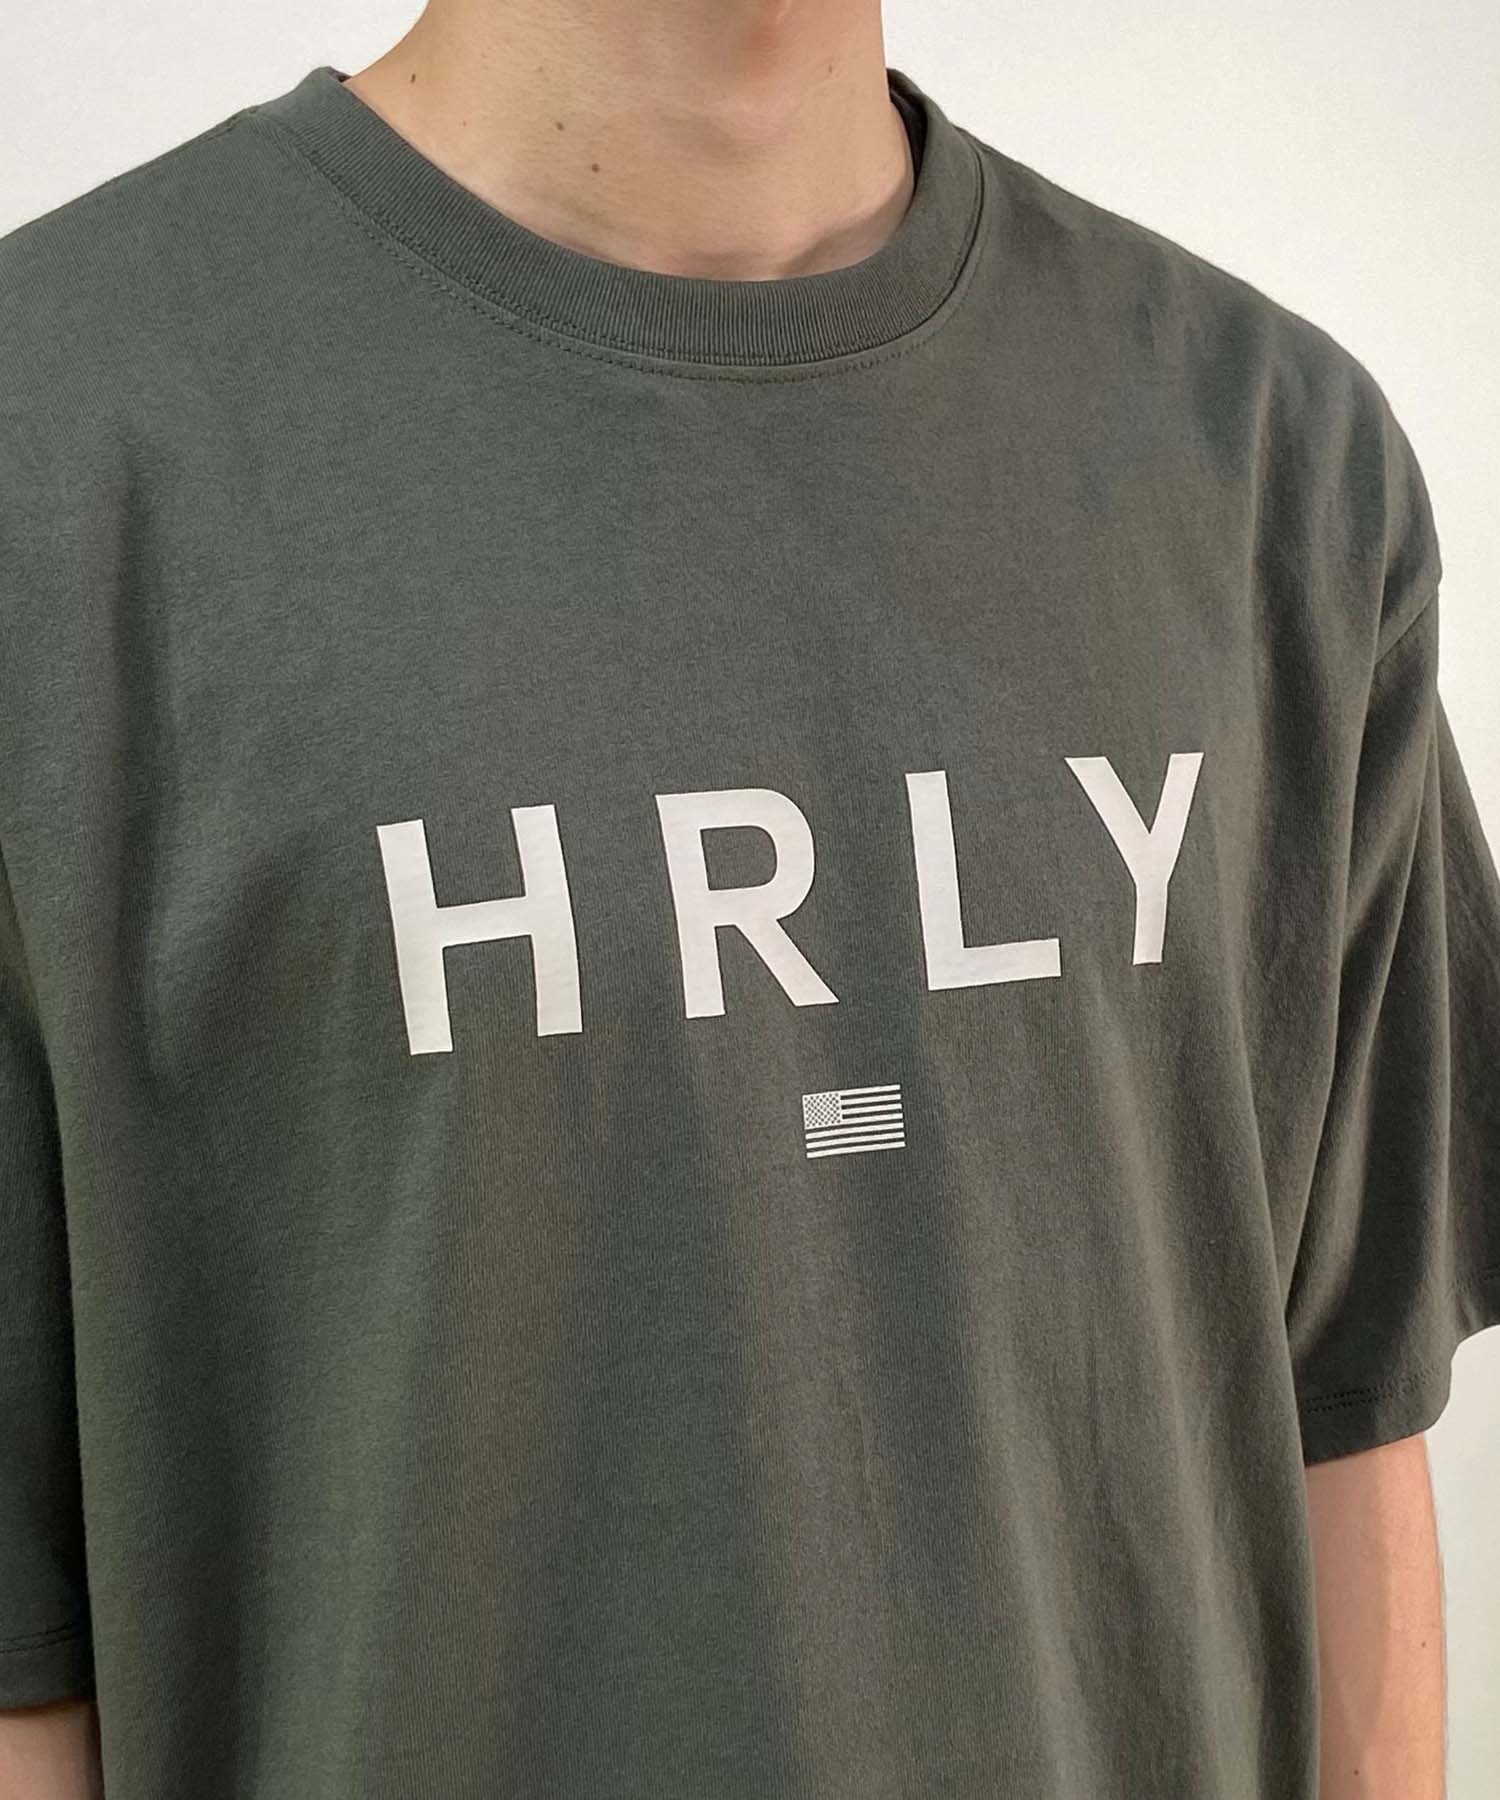 Hurley ハーレー OVERSIZED HURLEY SHORT SLEEVE TEE メンズ 半袖 Tシャツ MSS2411020(DFR-S)